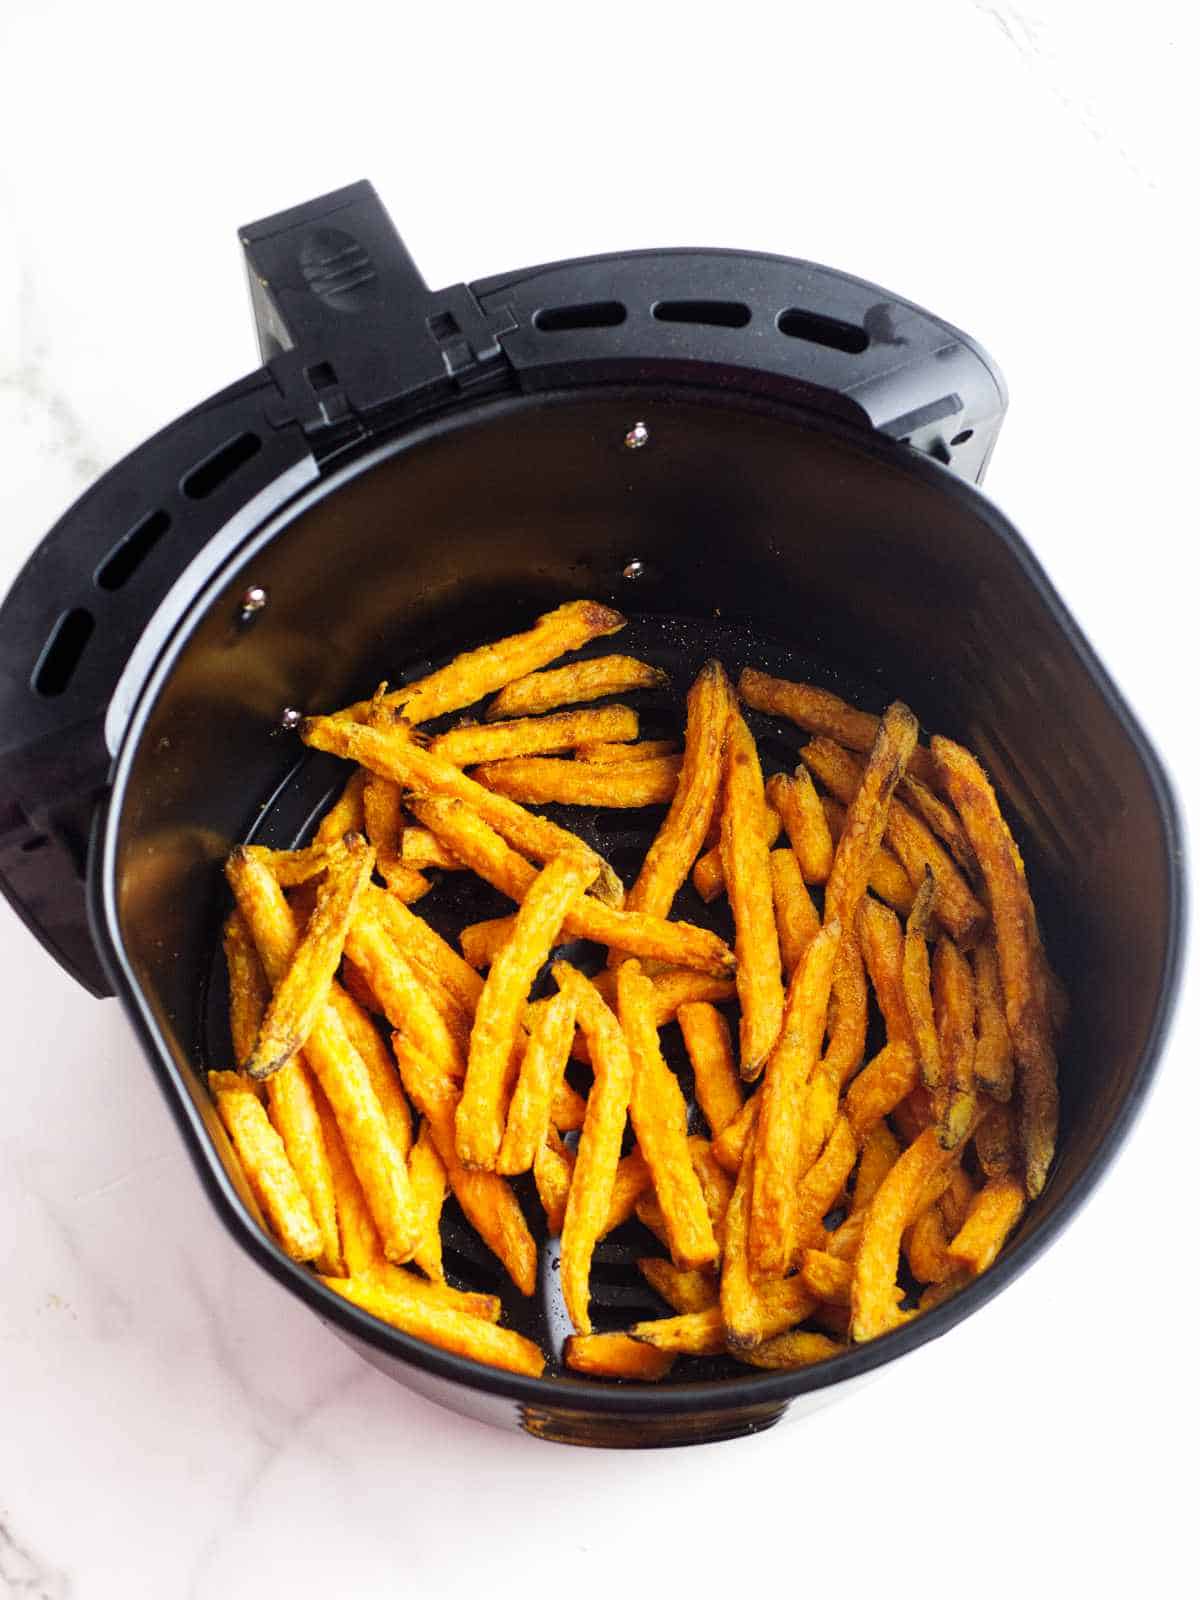 crisp frites just air fried.